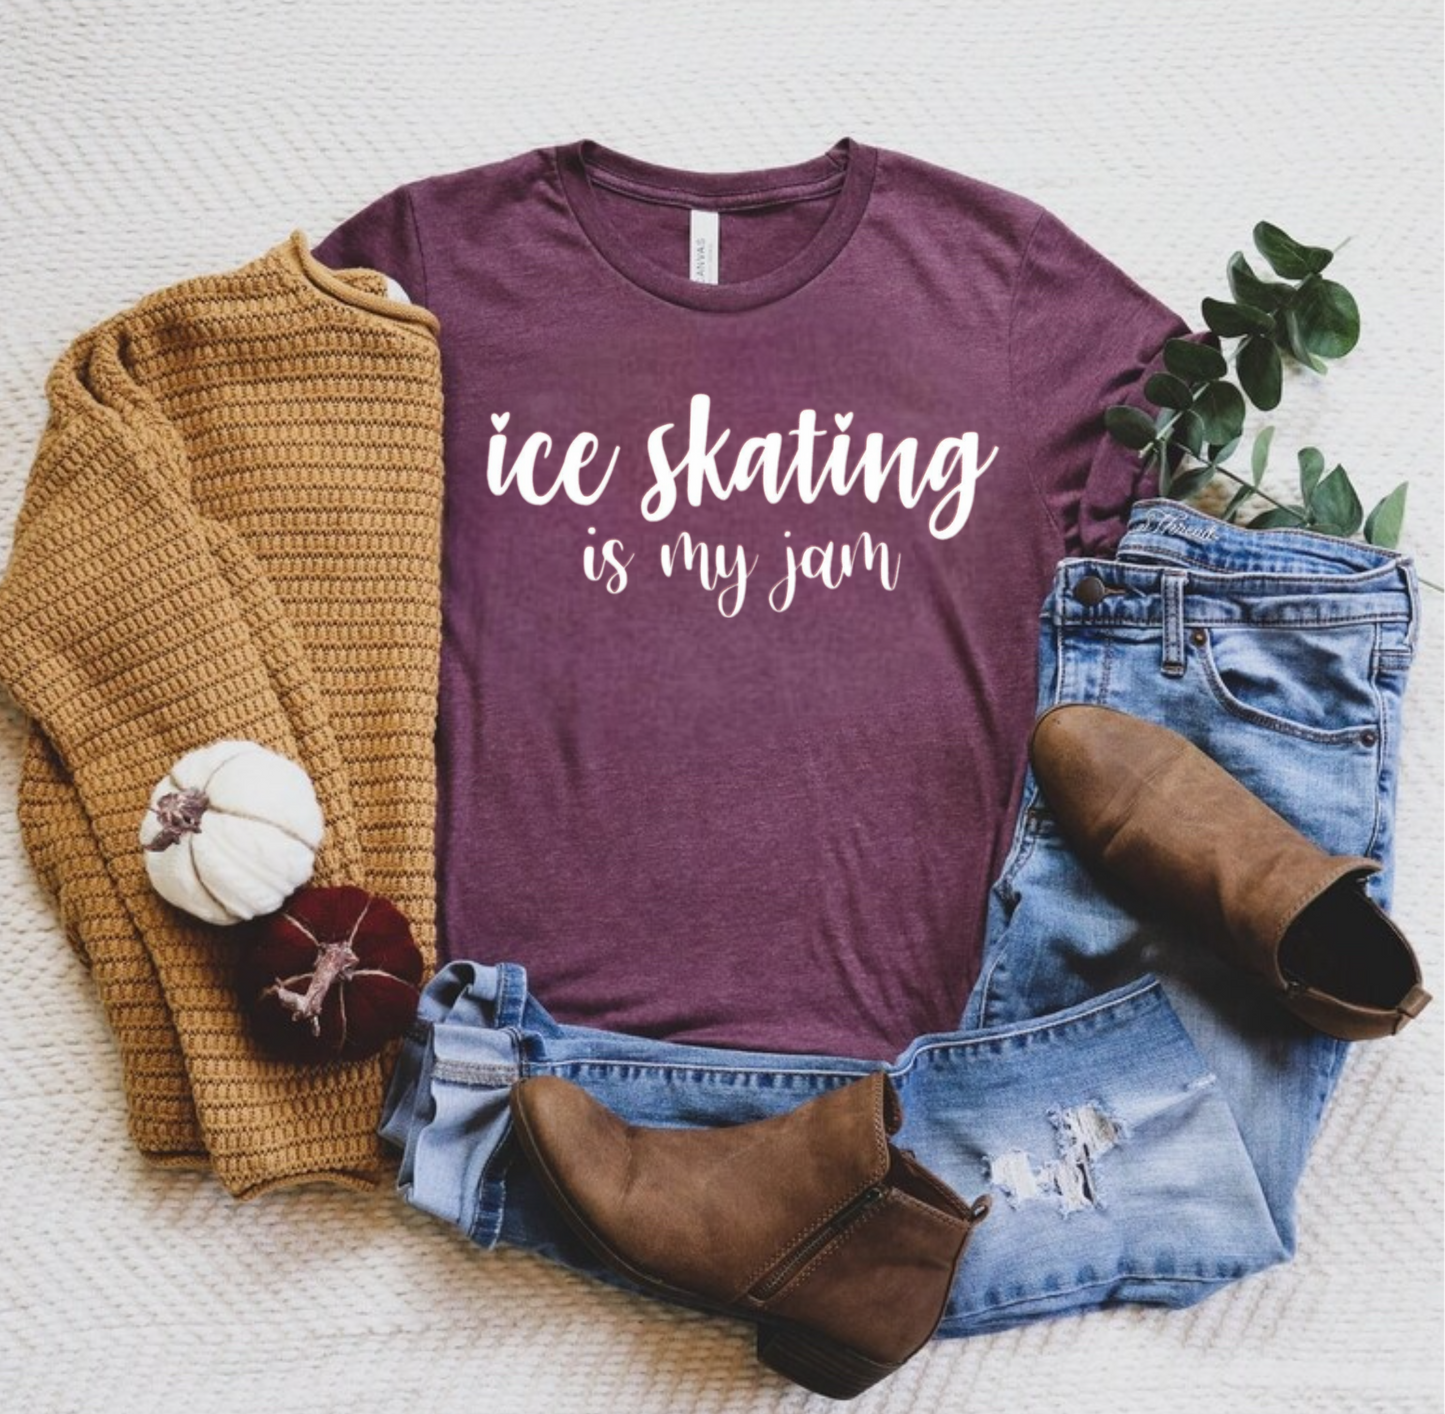 Iceskating is my jam shirt| Figure skating tee